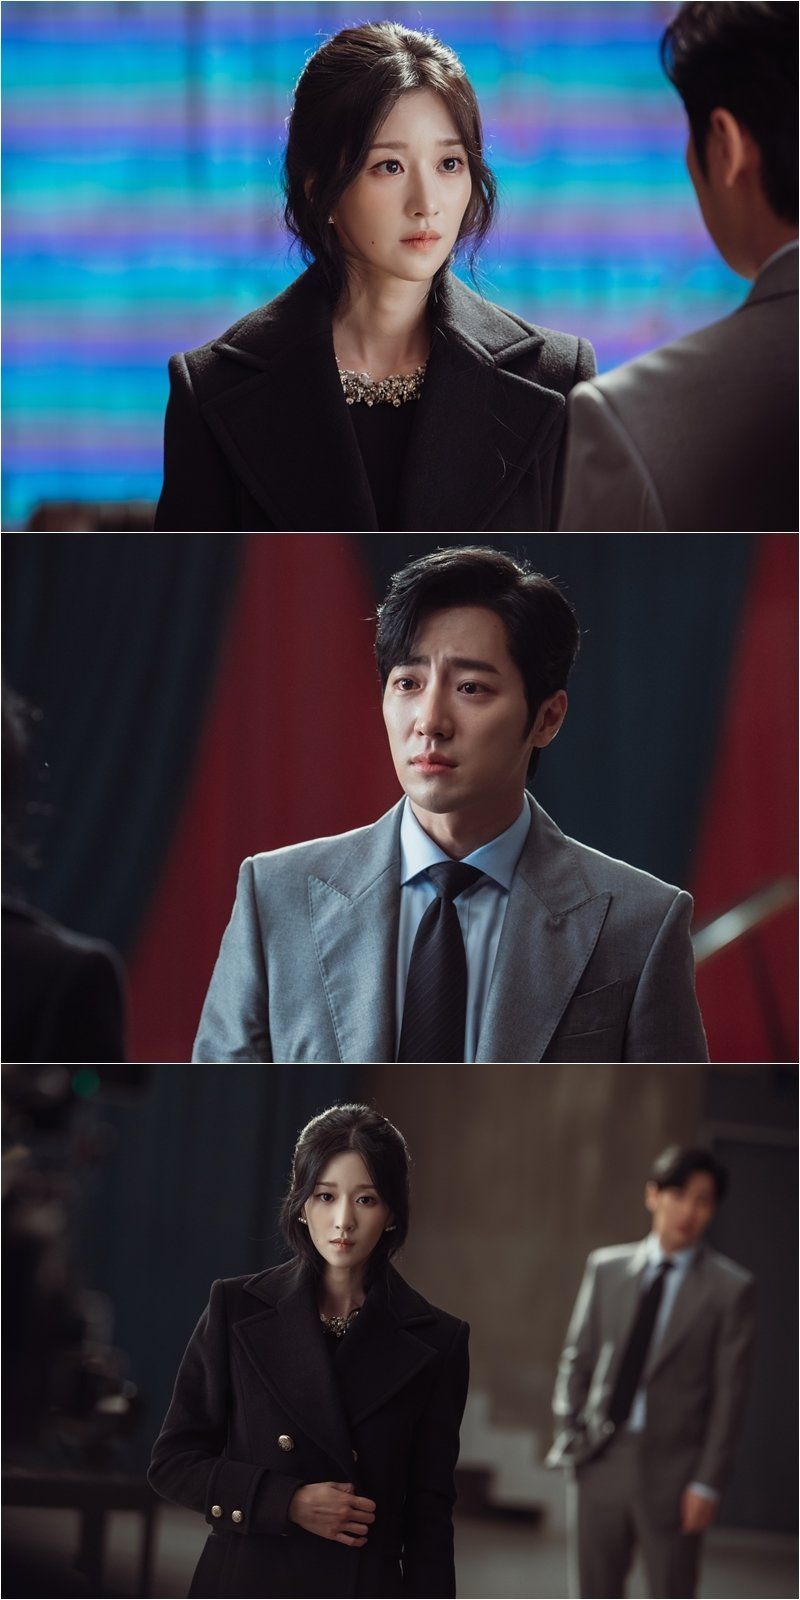 Seo Ye Ji dan Lee Sang Yeob Saling Berhadapan dengan Reaksi Berlawanan dalam Drama Mendatang 'Eve'